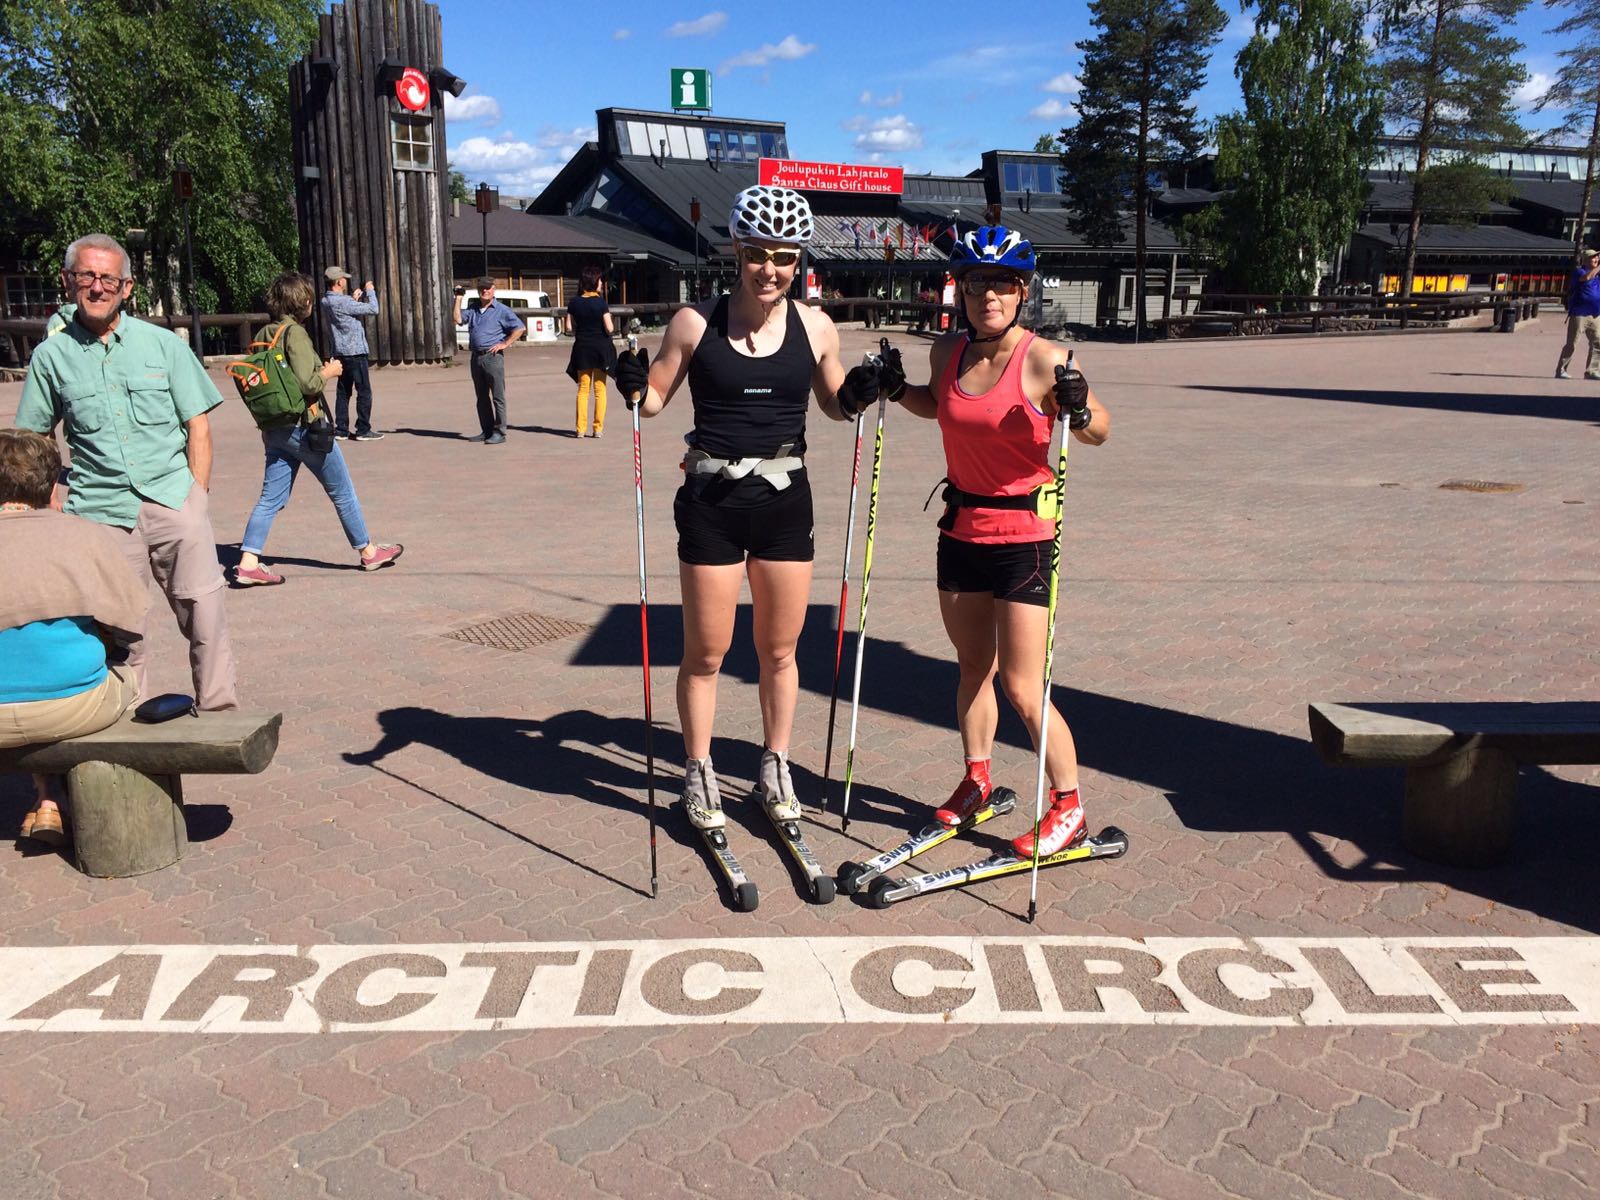 Niiranen (left) and Iina Ahokas rollerskiing in Rovaniemi. (Courtesy photo)